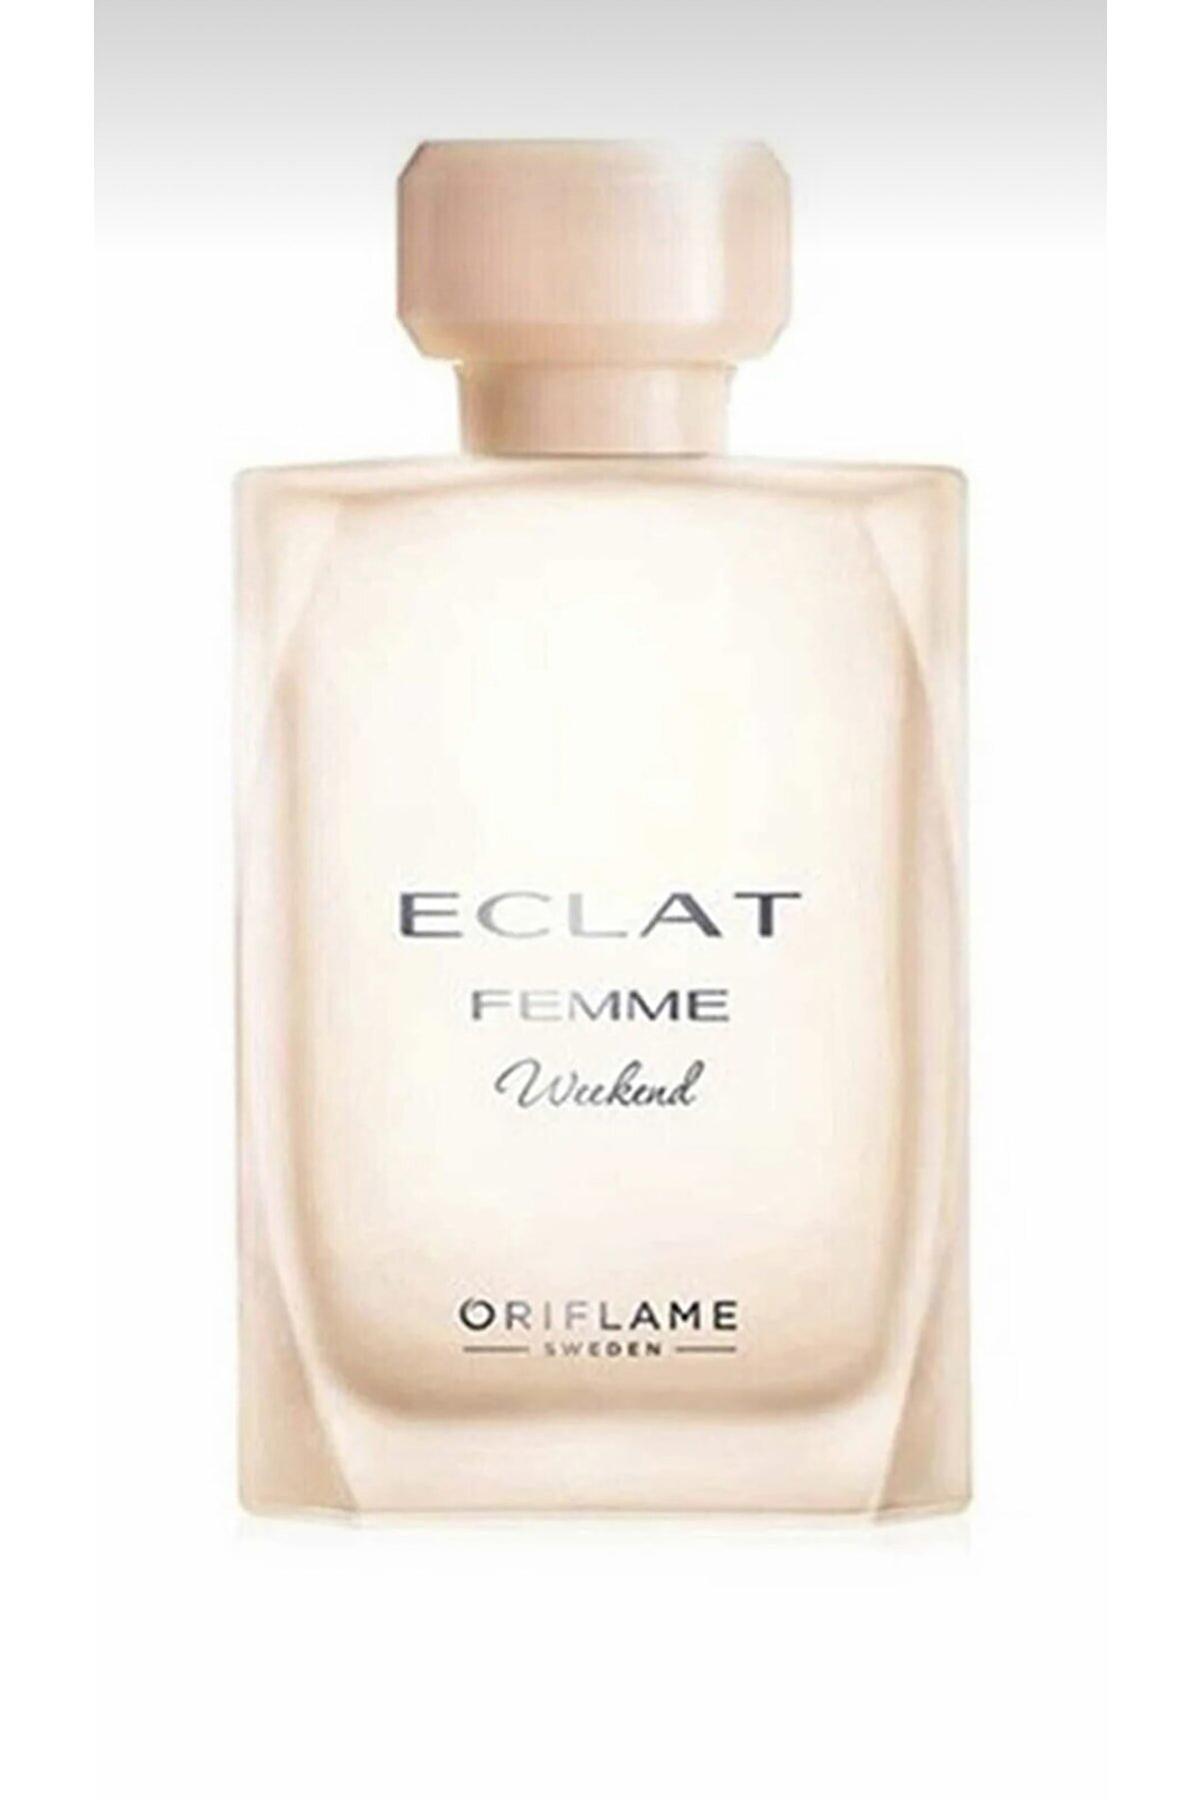 Oriflame Eclat Femme Weekend EDT Meyvemsi Kadın Parfüm 50 ml